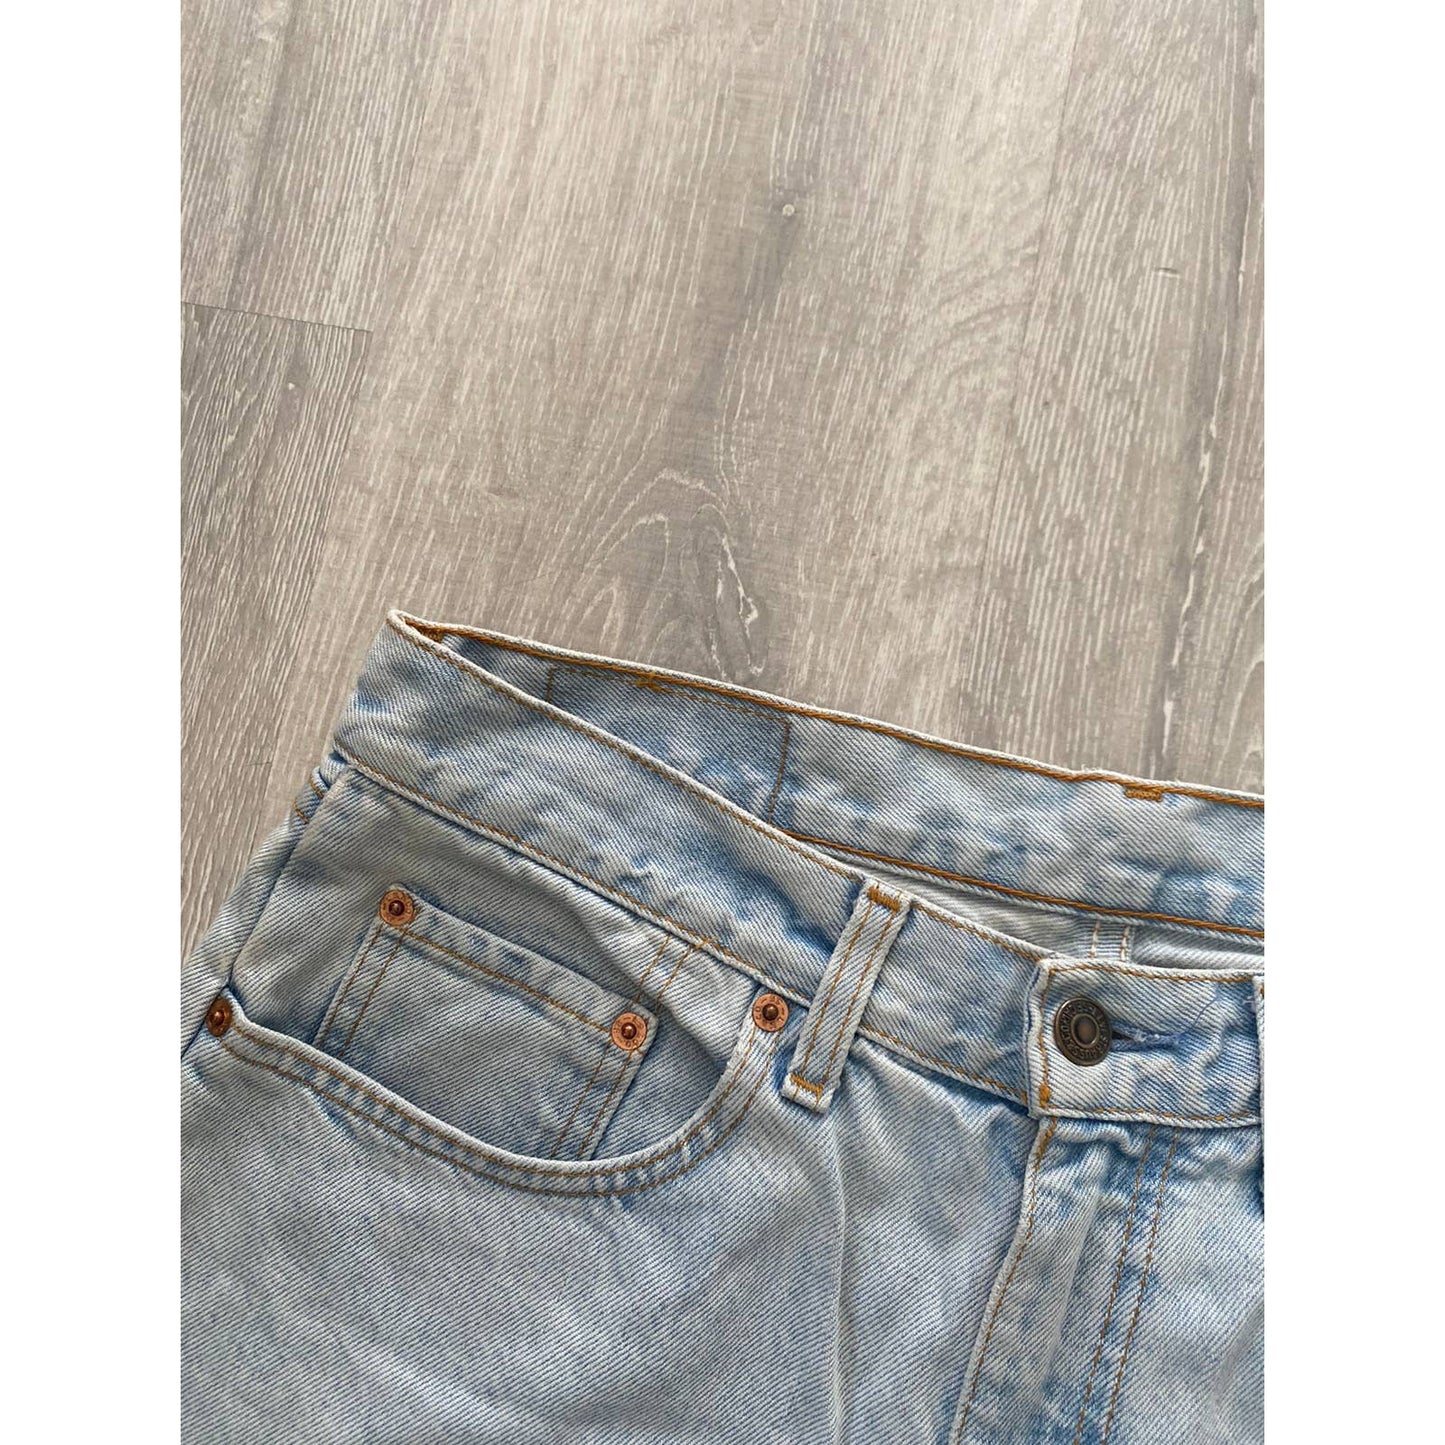 90s Levi’s 615 02 vintage Orange tab baby blue jeans denim